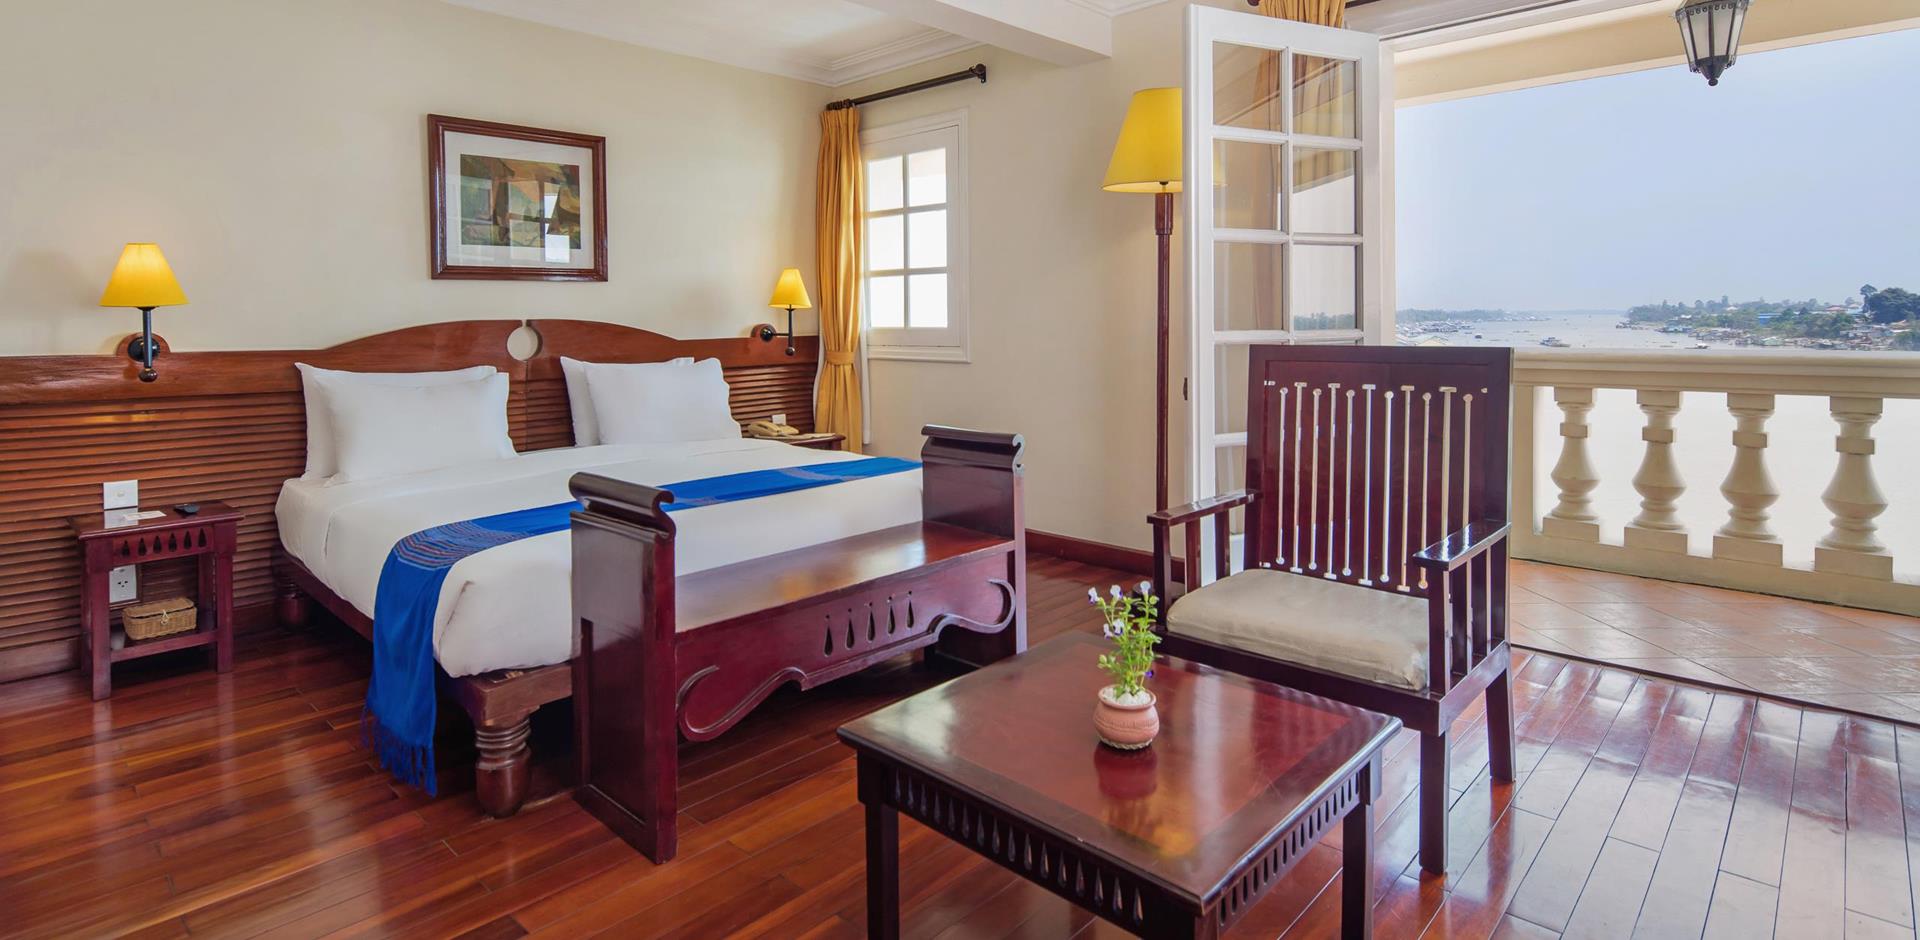 Bedroom, Victoria Chau Doc Hotel, Vietnam